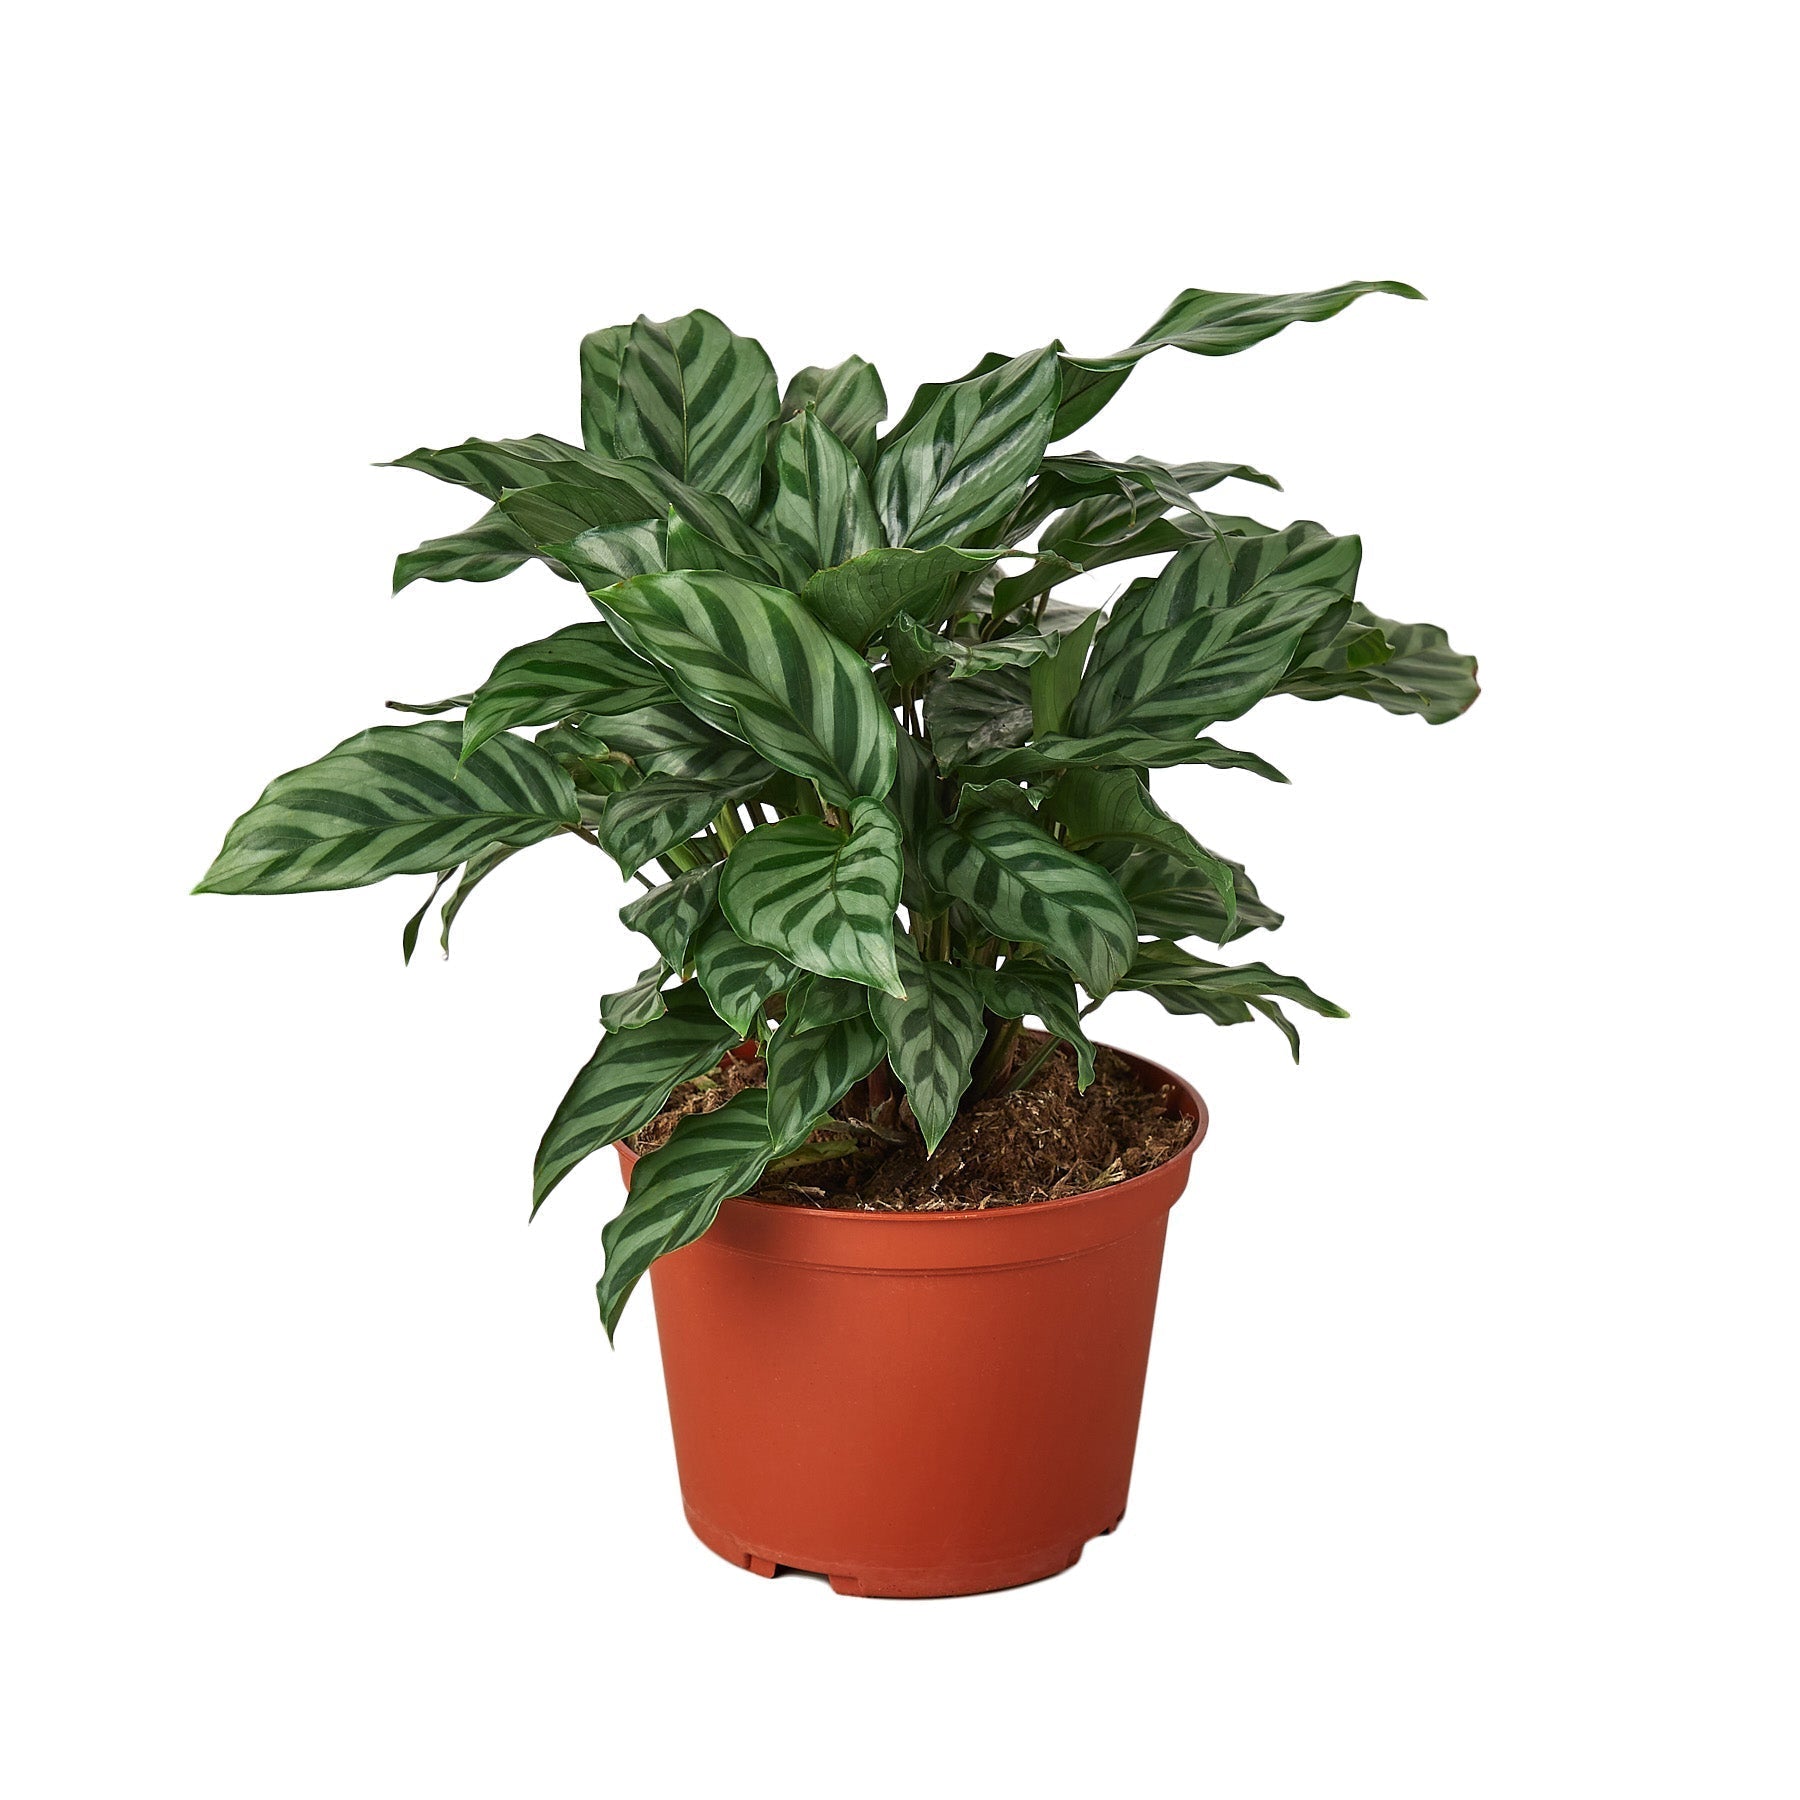 Calathea Concinna 'Freddie' - 6" Pot - NURSERY POT ONLY - One Beleaf Away Plant Studio